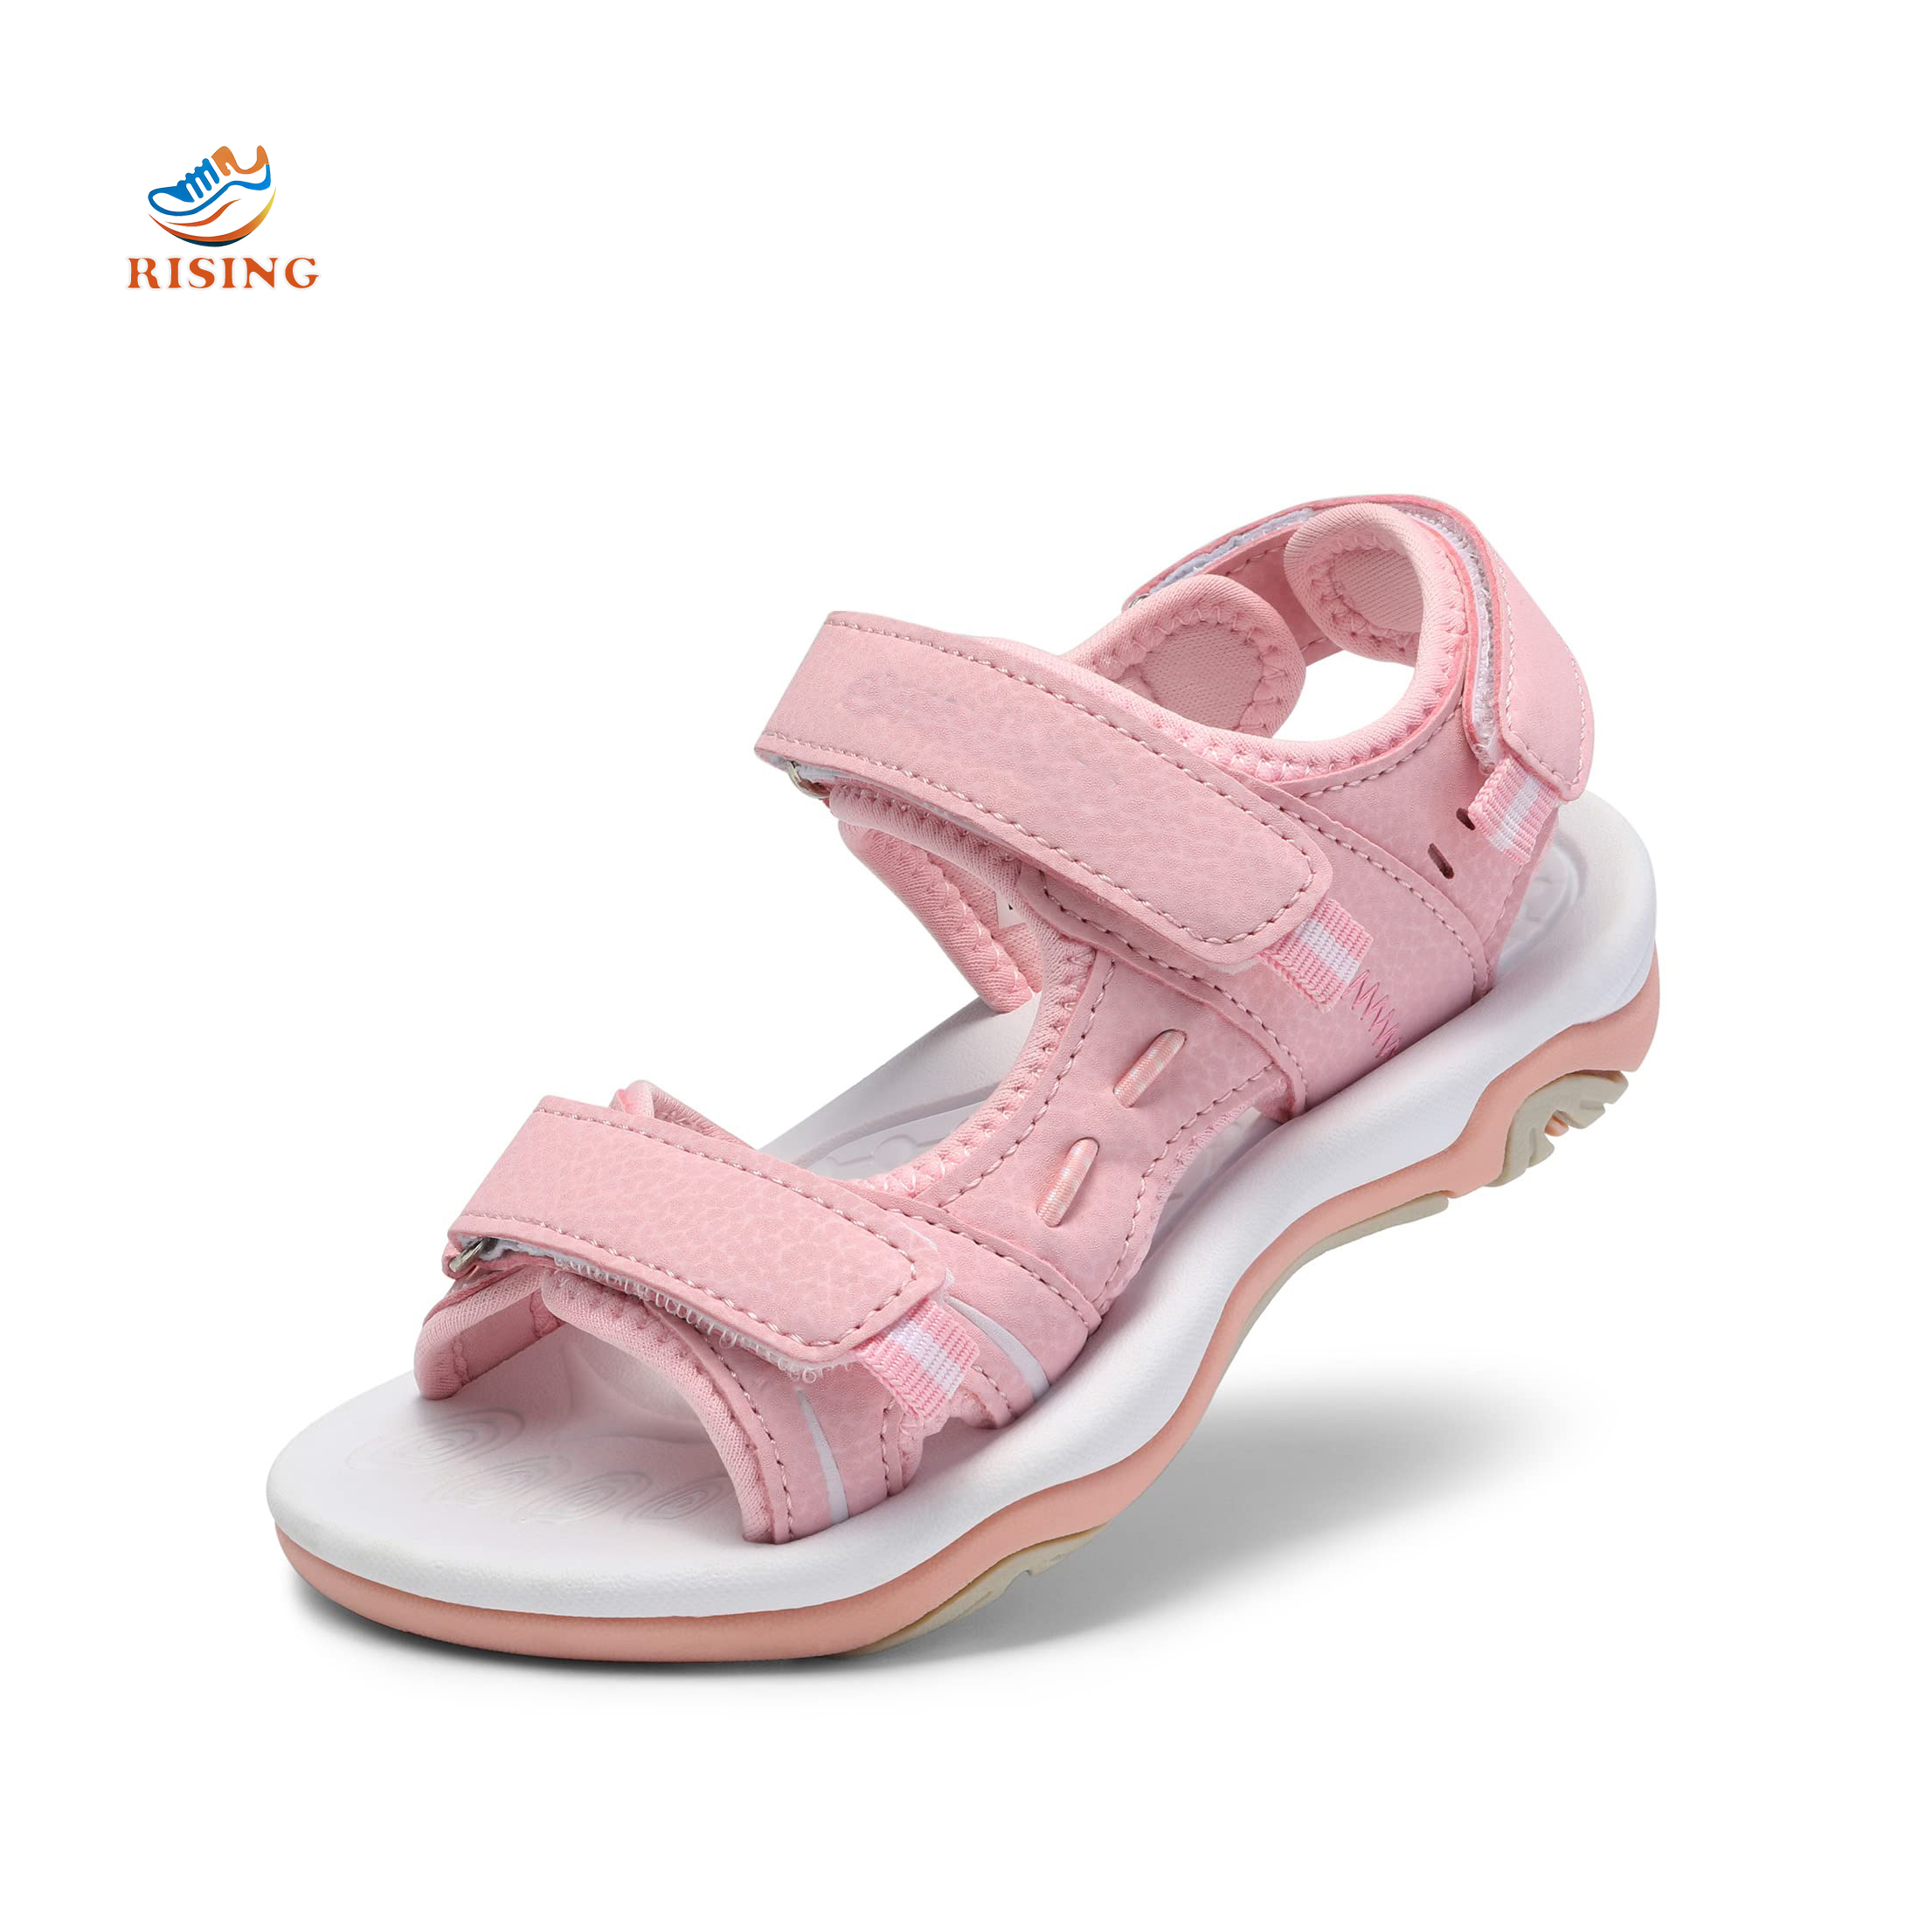 Kids Adventurous Light-Weight Adjustable Straps Summer Sandals 